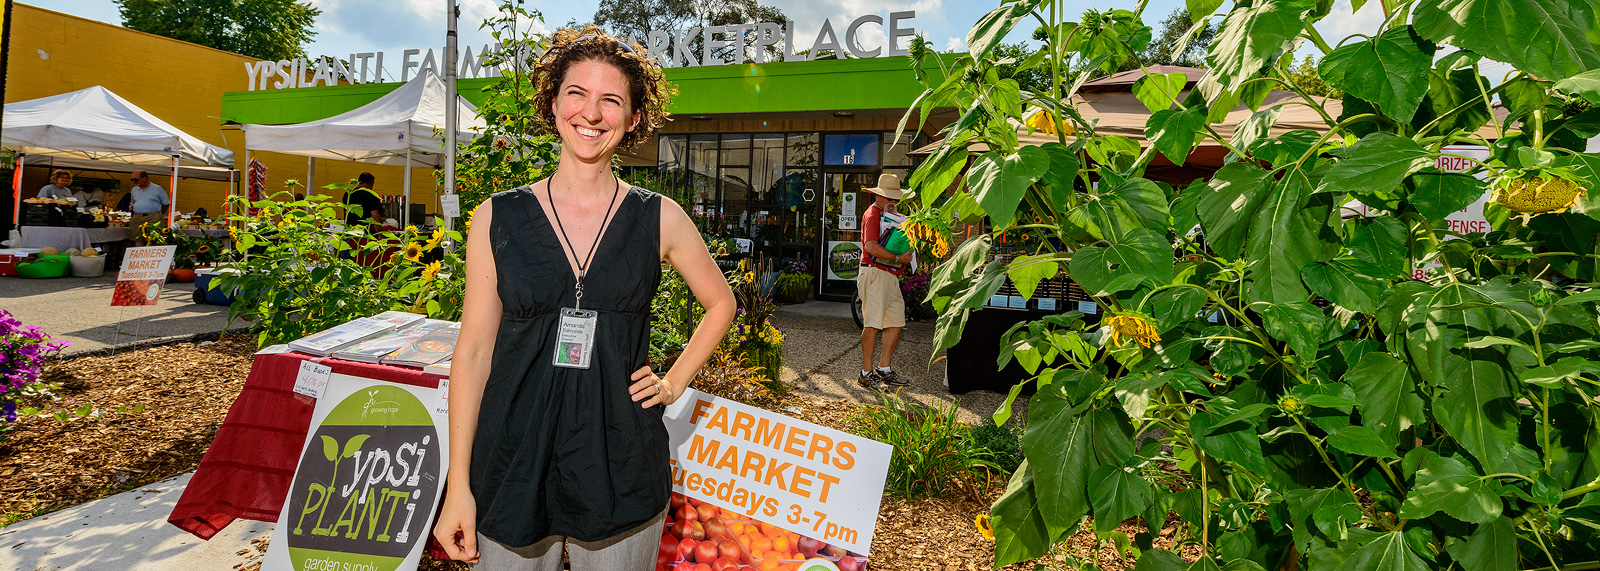 Mayor Amanda Edmonds at the Ypsilanti Farmers Market